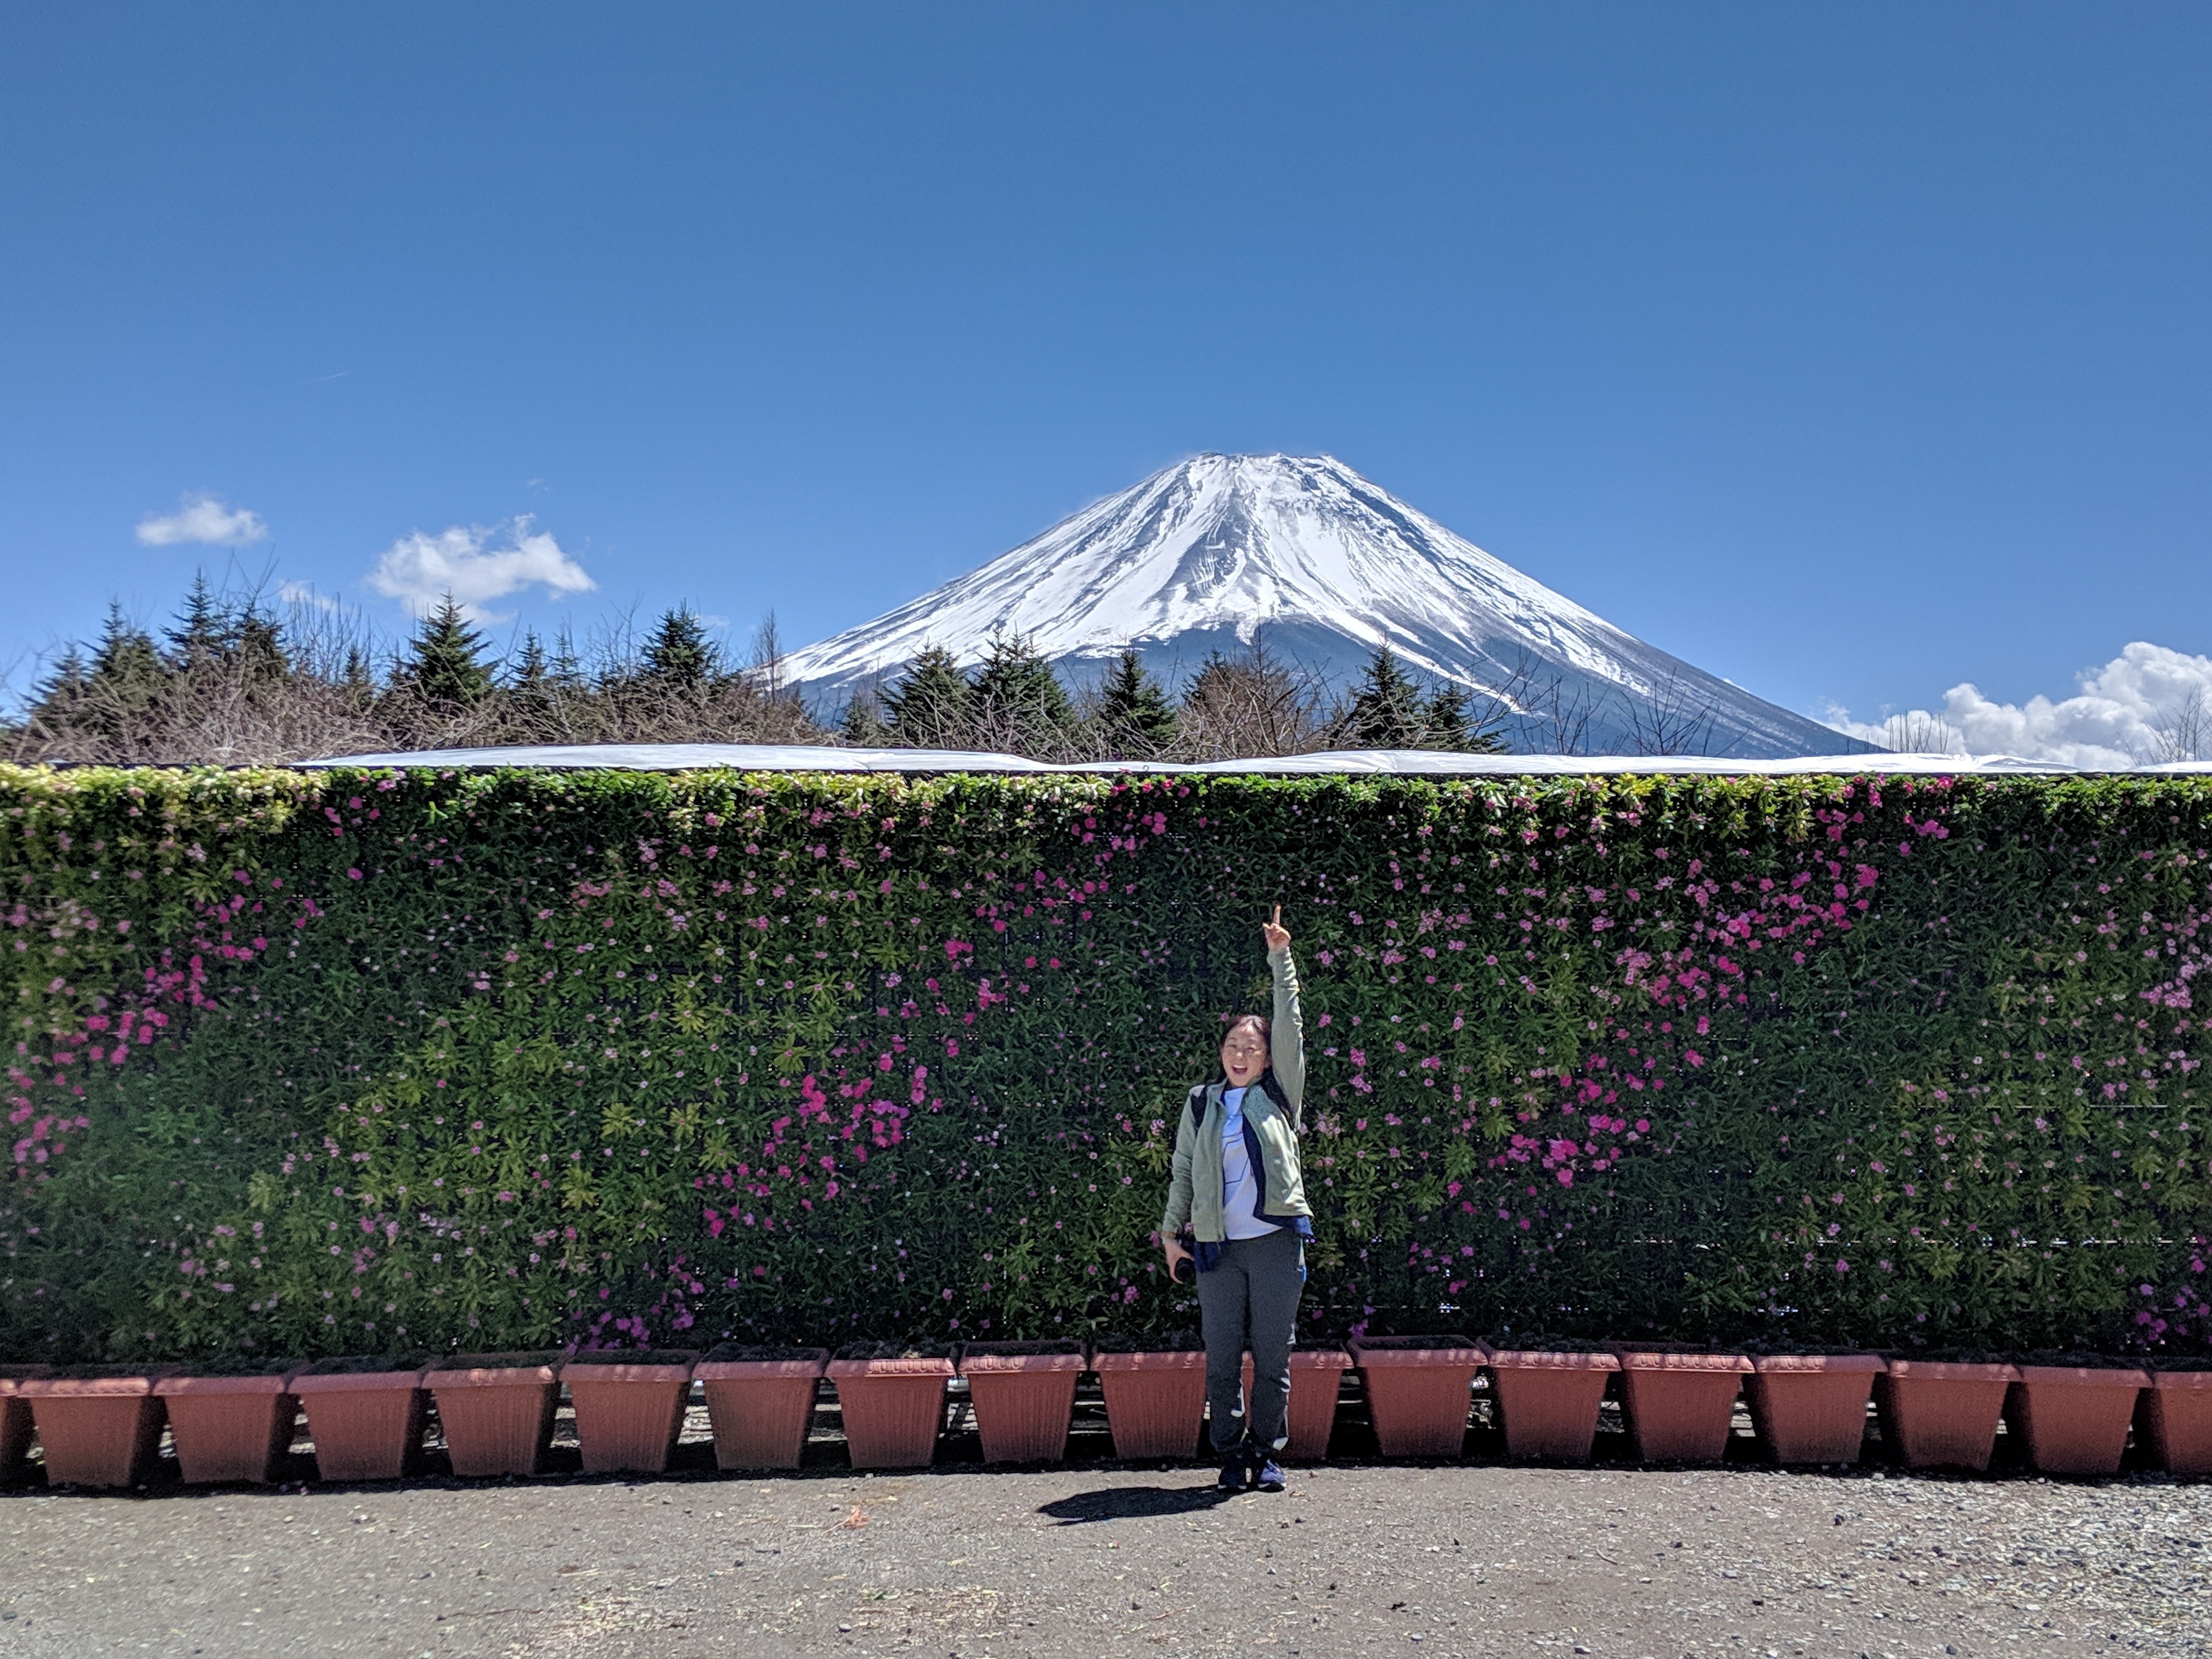 Obligatory flowers + Fuji shot